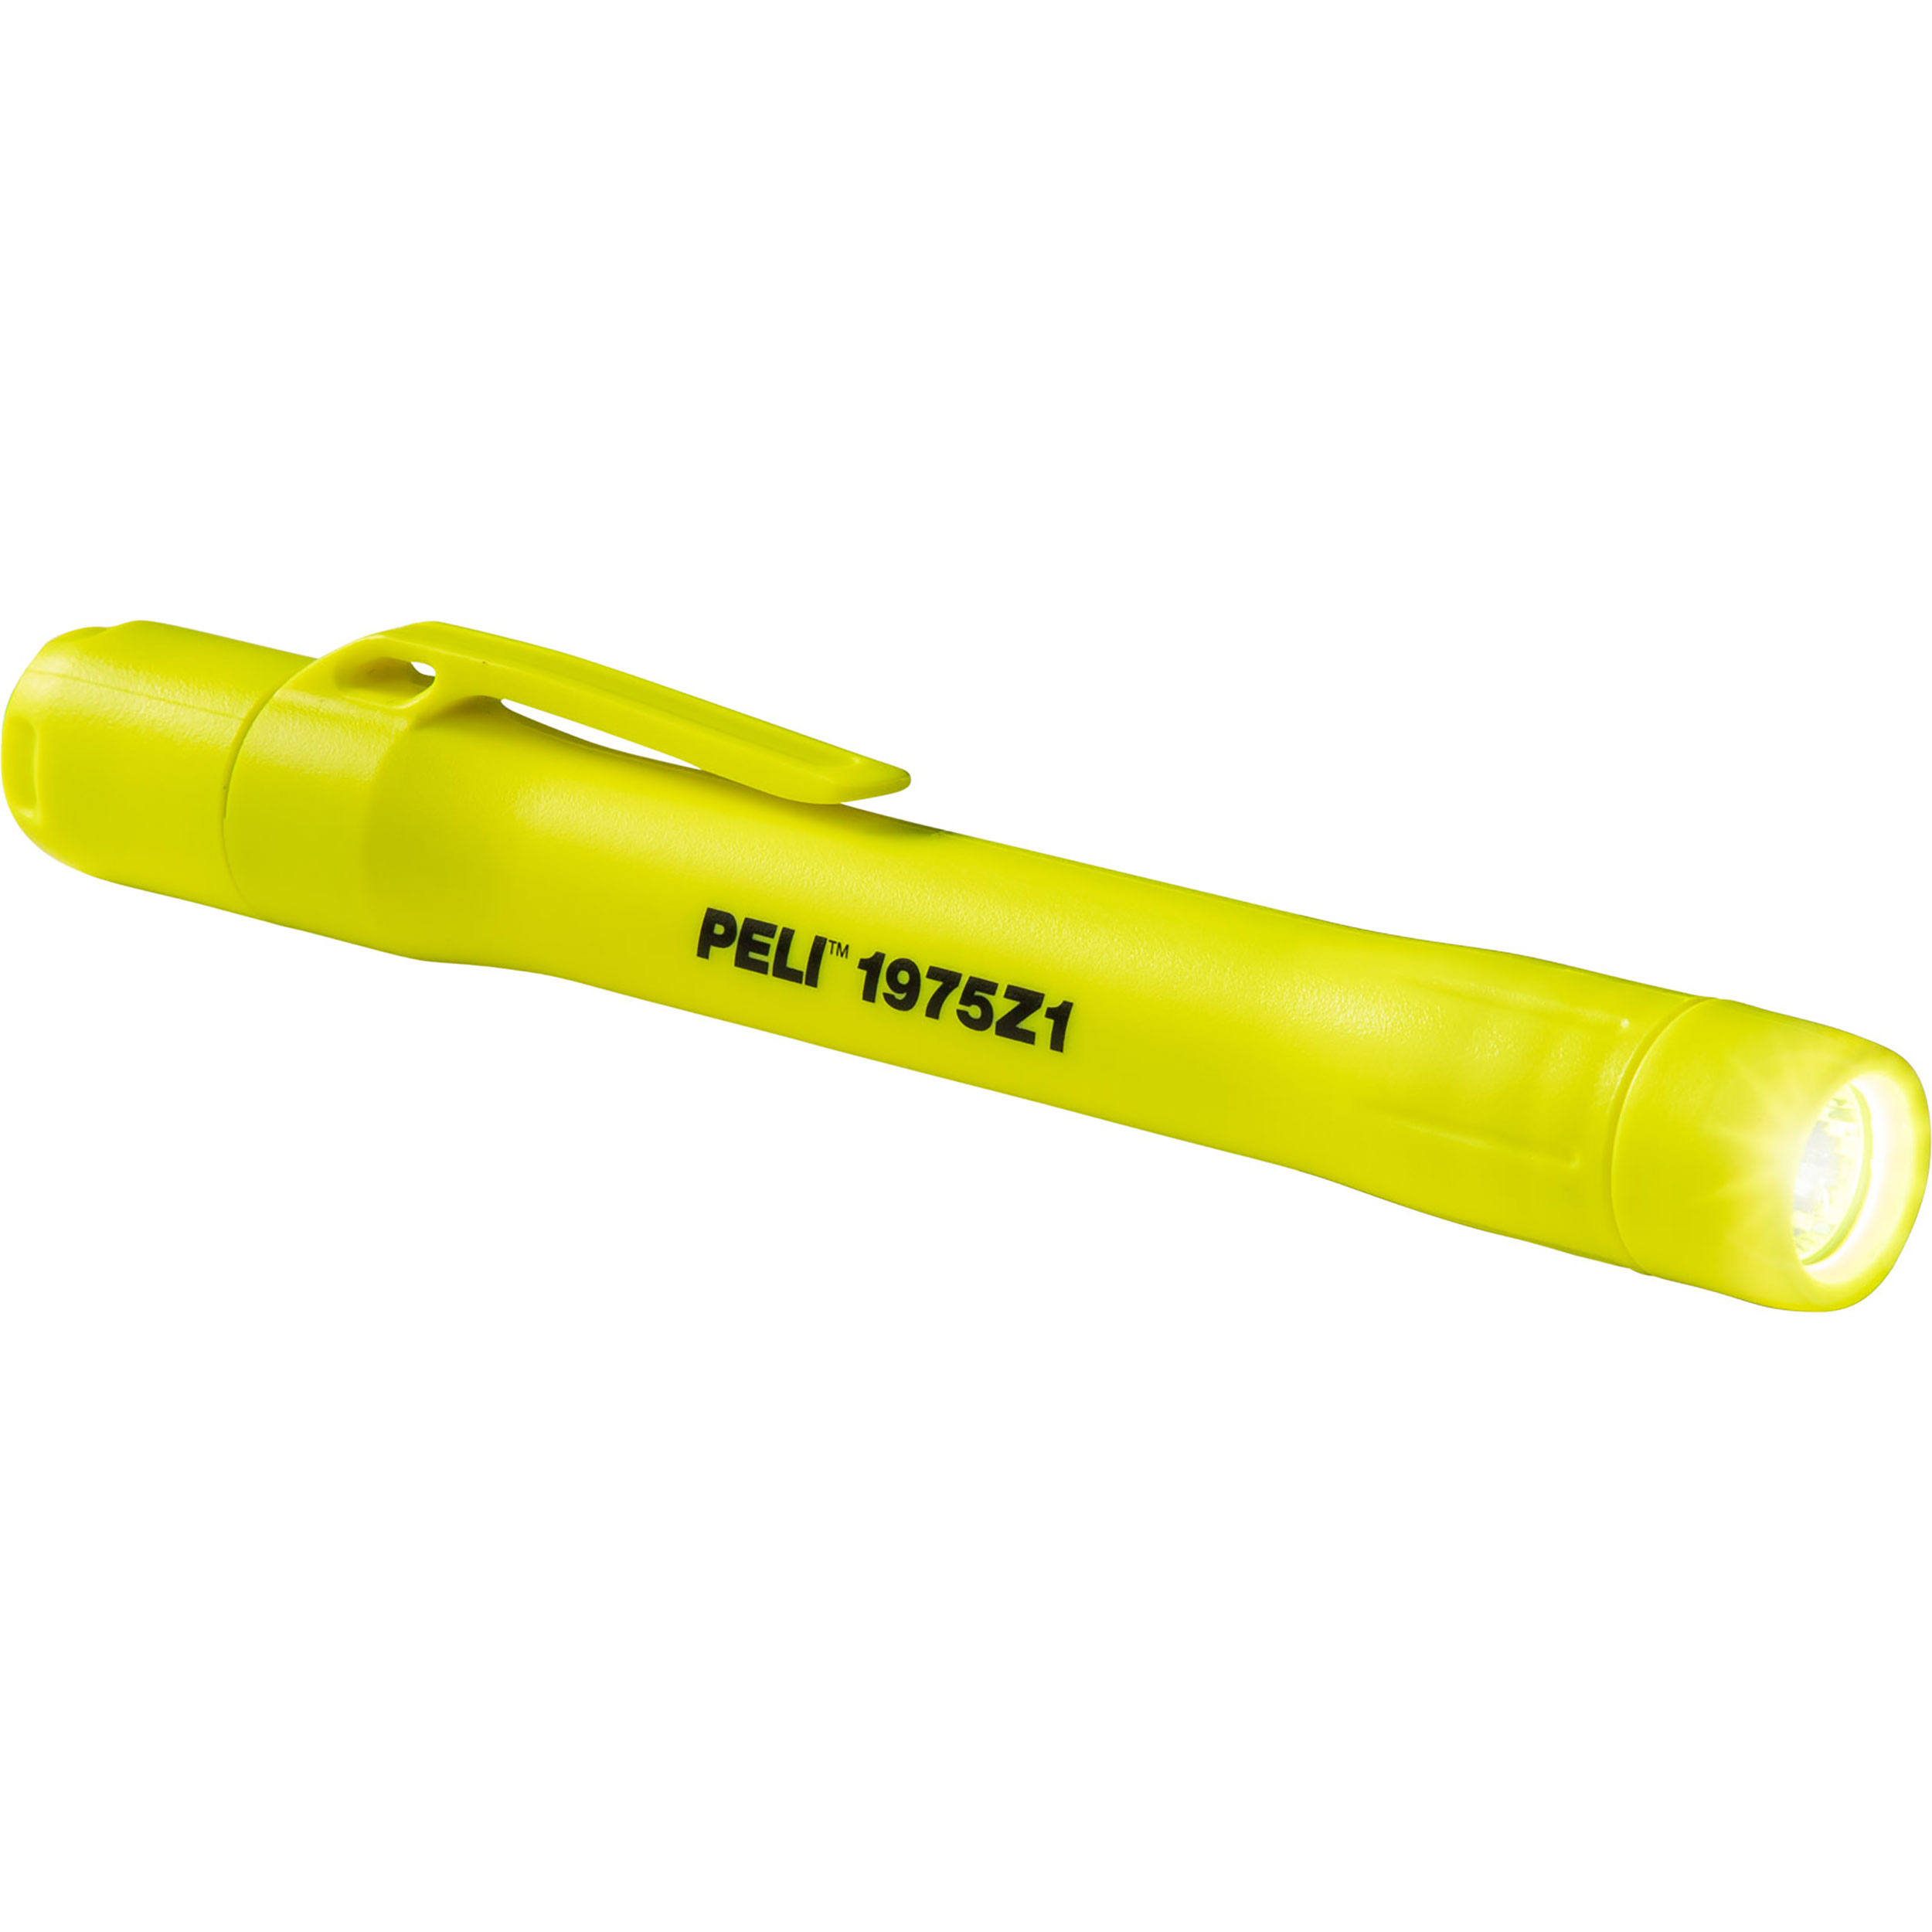 Torche Peli™ 1975Z1 MityLite™ (Atex Zone 1) jaune